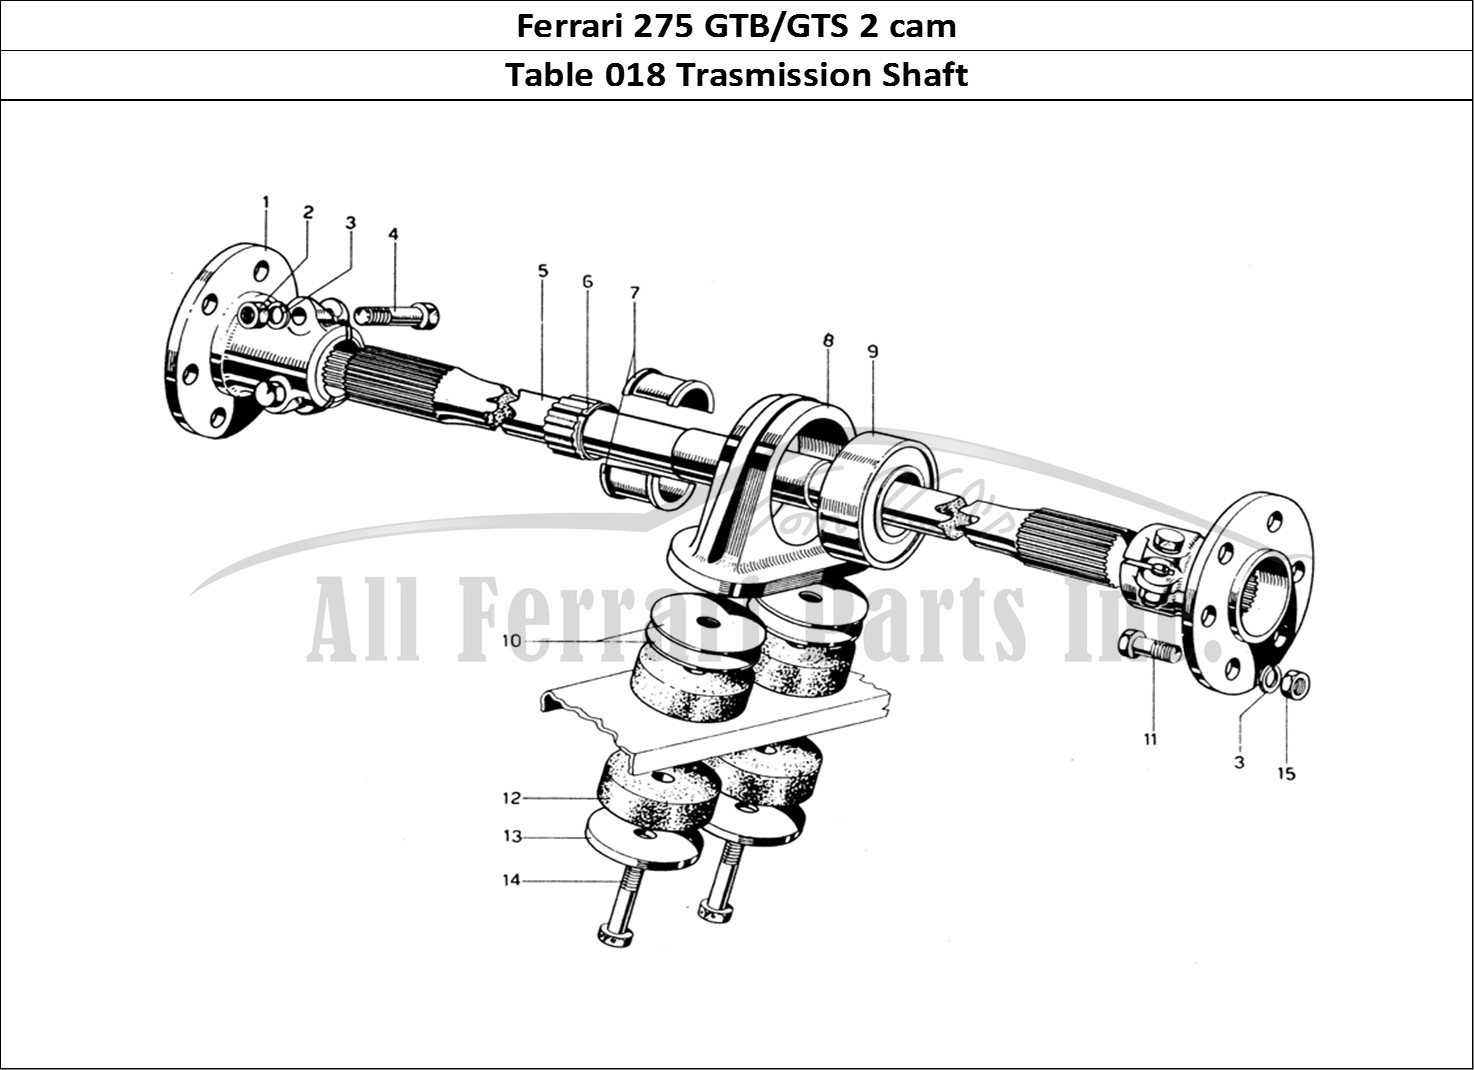 Ferrari Parts Ferrari 275 GTB/GTS 2 cam Page 018 Trasmission Shaft